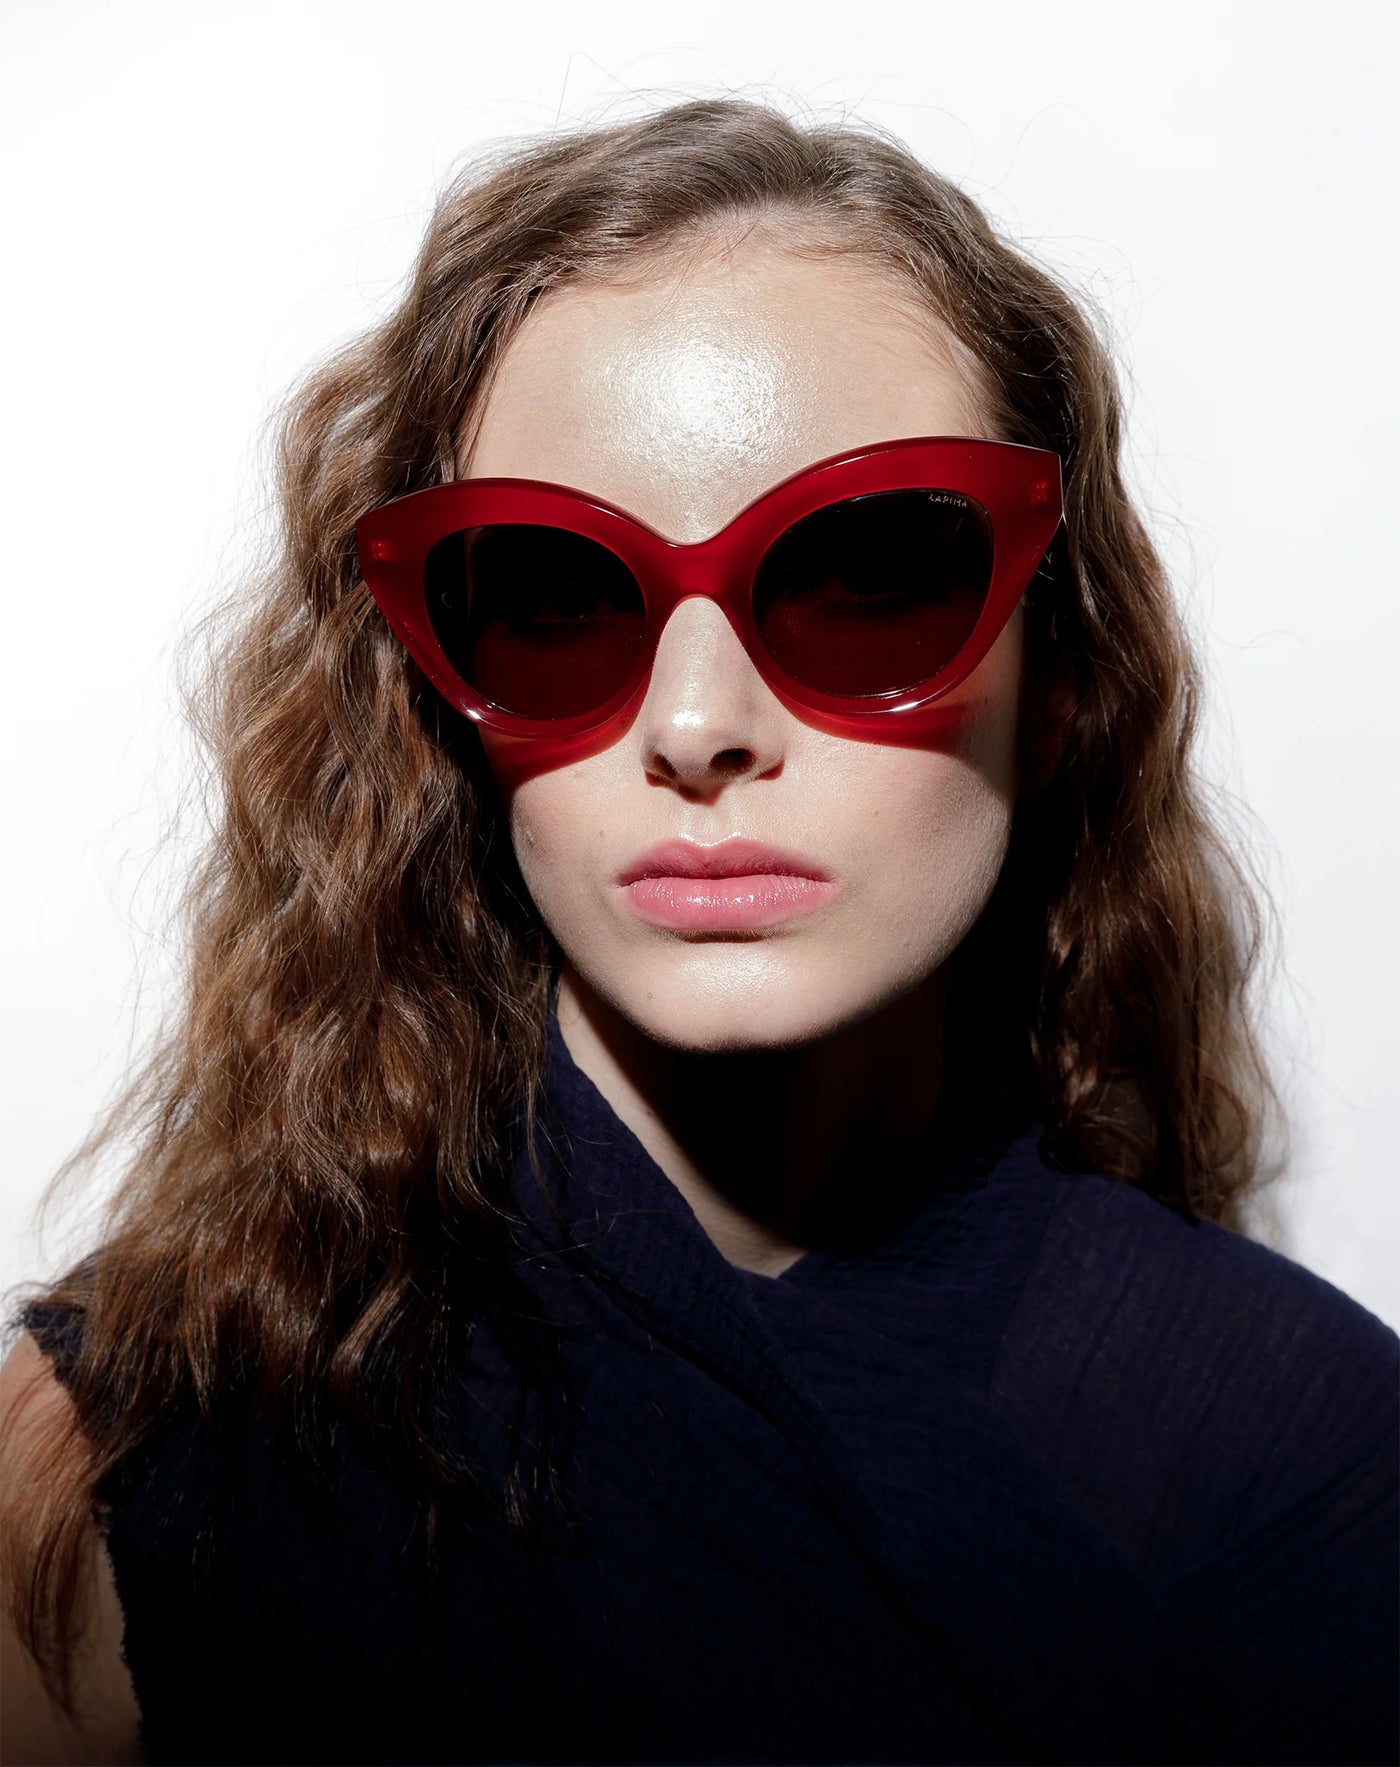 Manuela Red Sunglasses